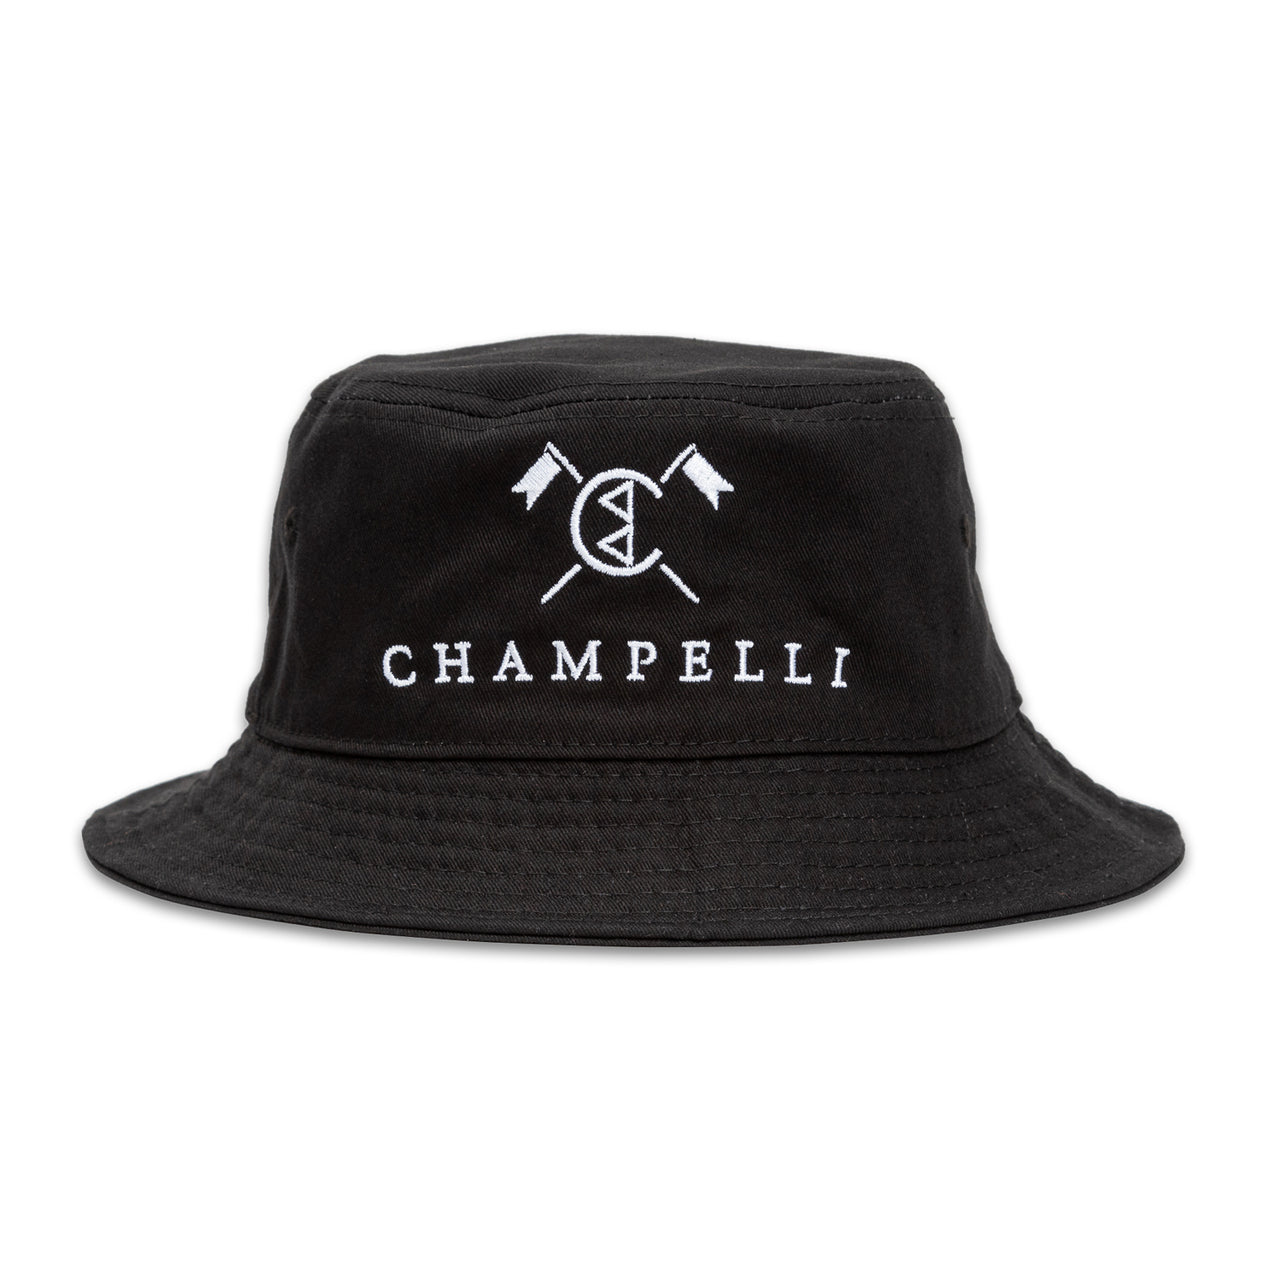 CHAMPELLI CLASSIC BUCKET HAT IN BLACK